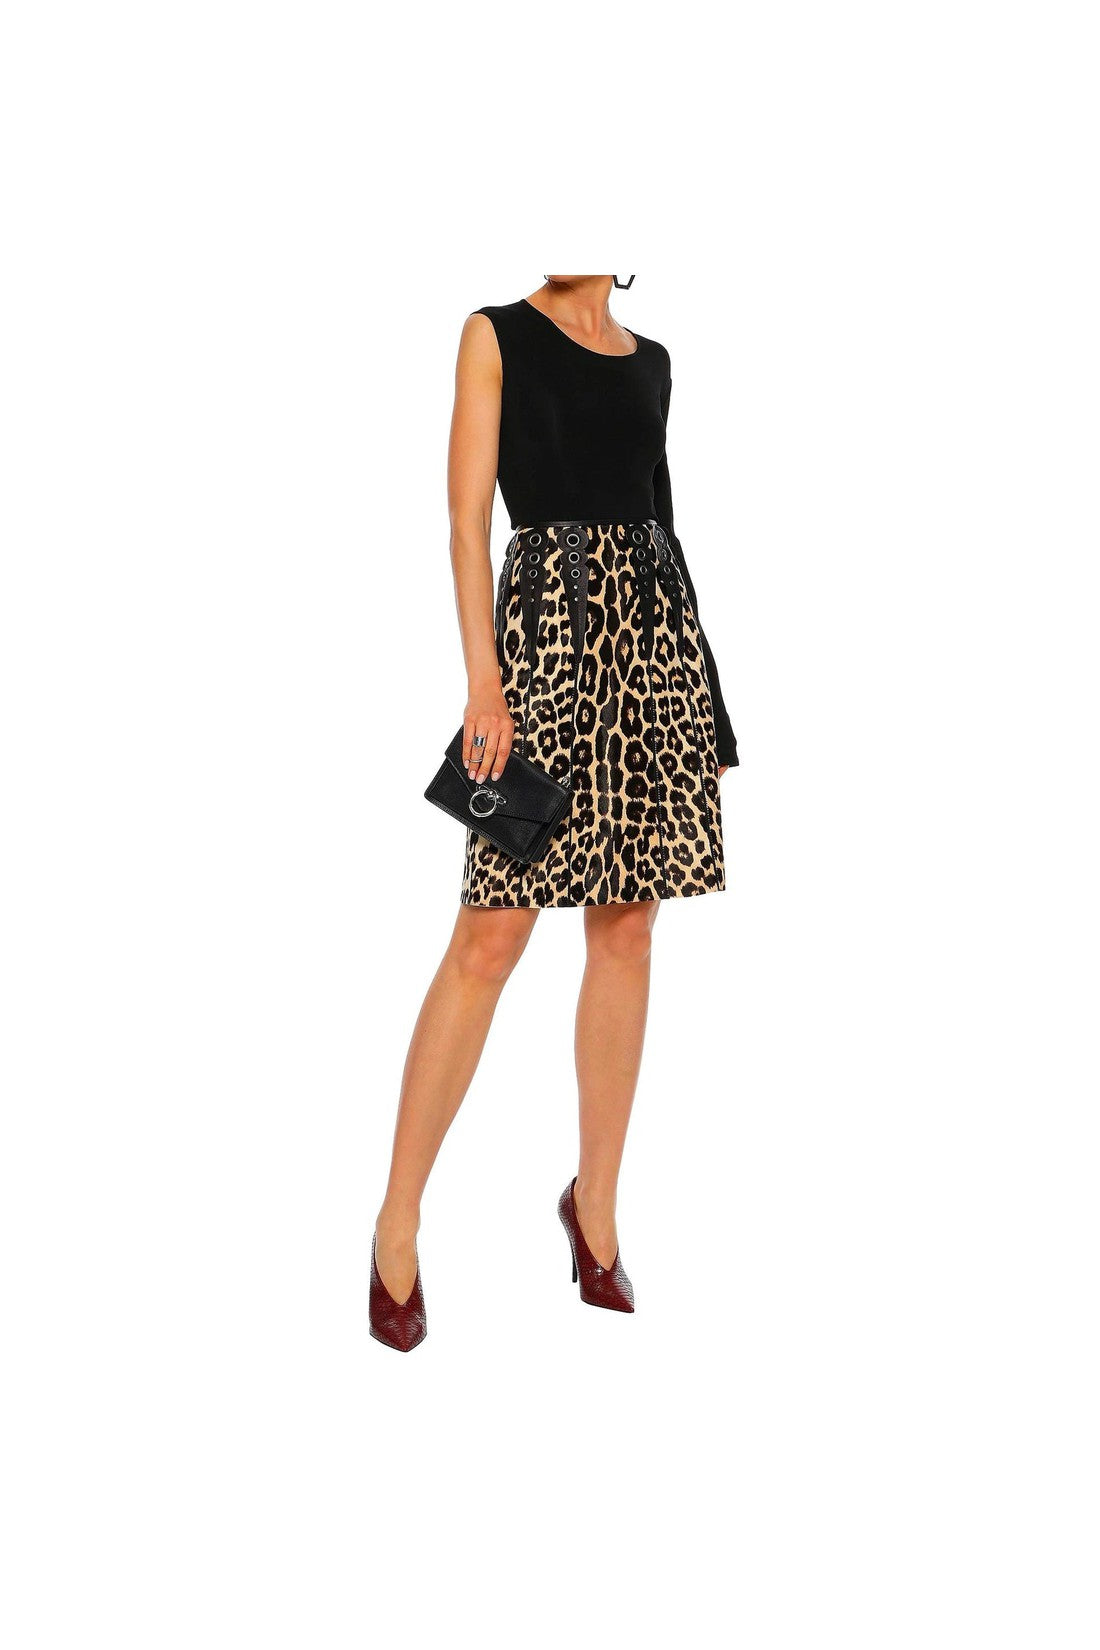 BOTTEGA VENETA-Bottega Veneta Leopard Print Calf Hair Skirt-WOMEN CLOTHING-Outlet-Sale